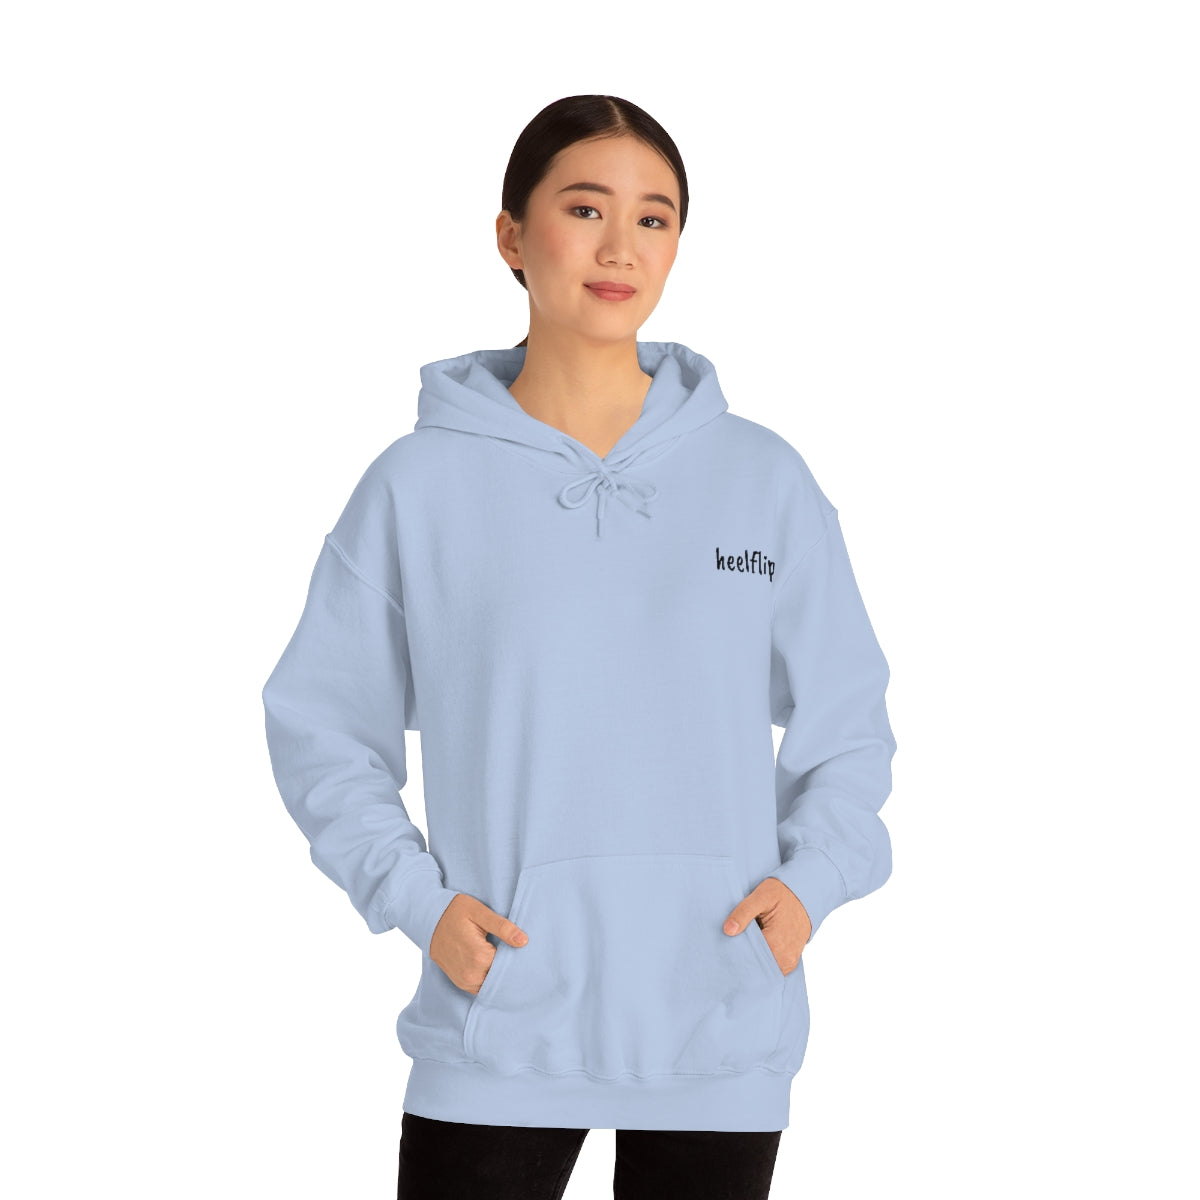 heelflip. Replika Heavy Blend™ Hooded Sweatshirt